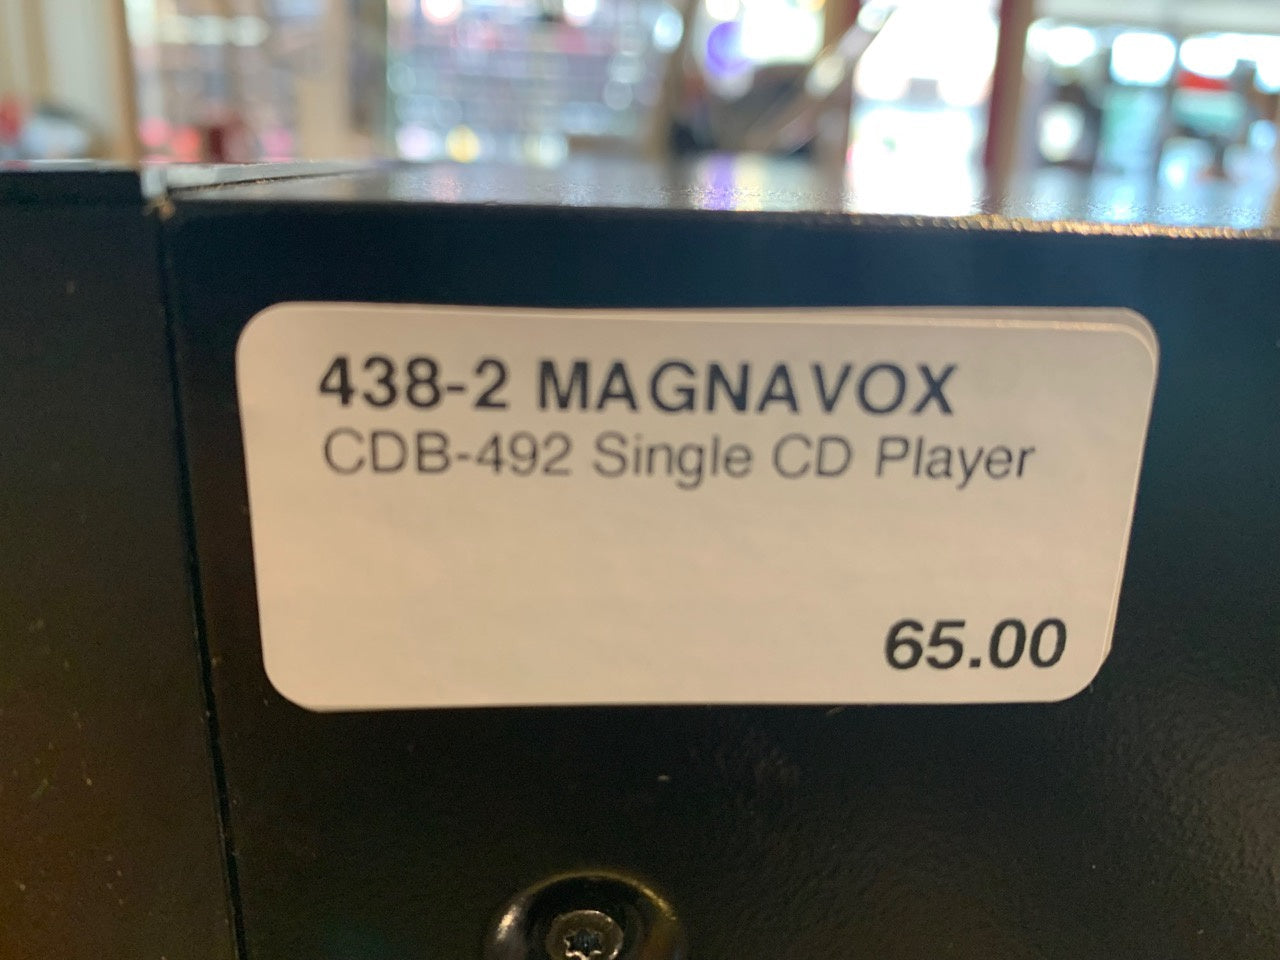 Magnavox CDB-492 Single CD Player